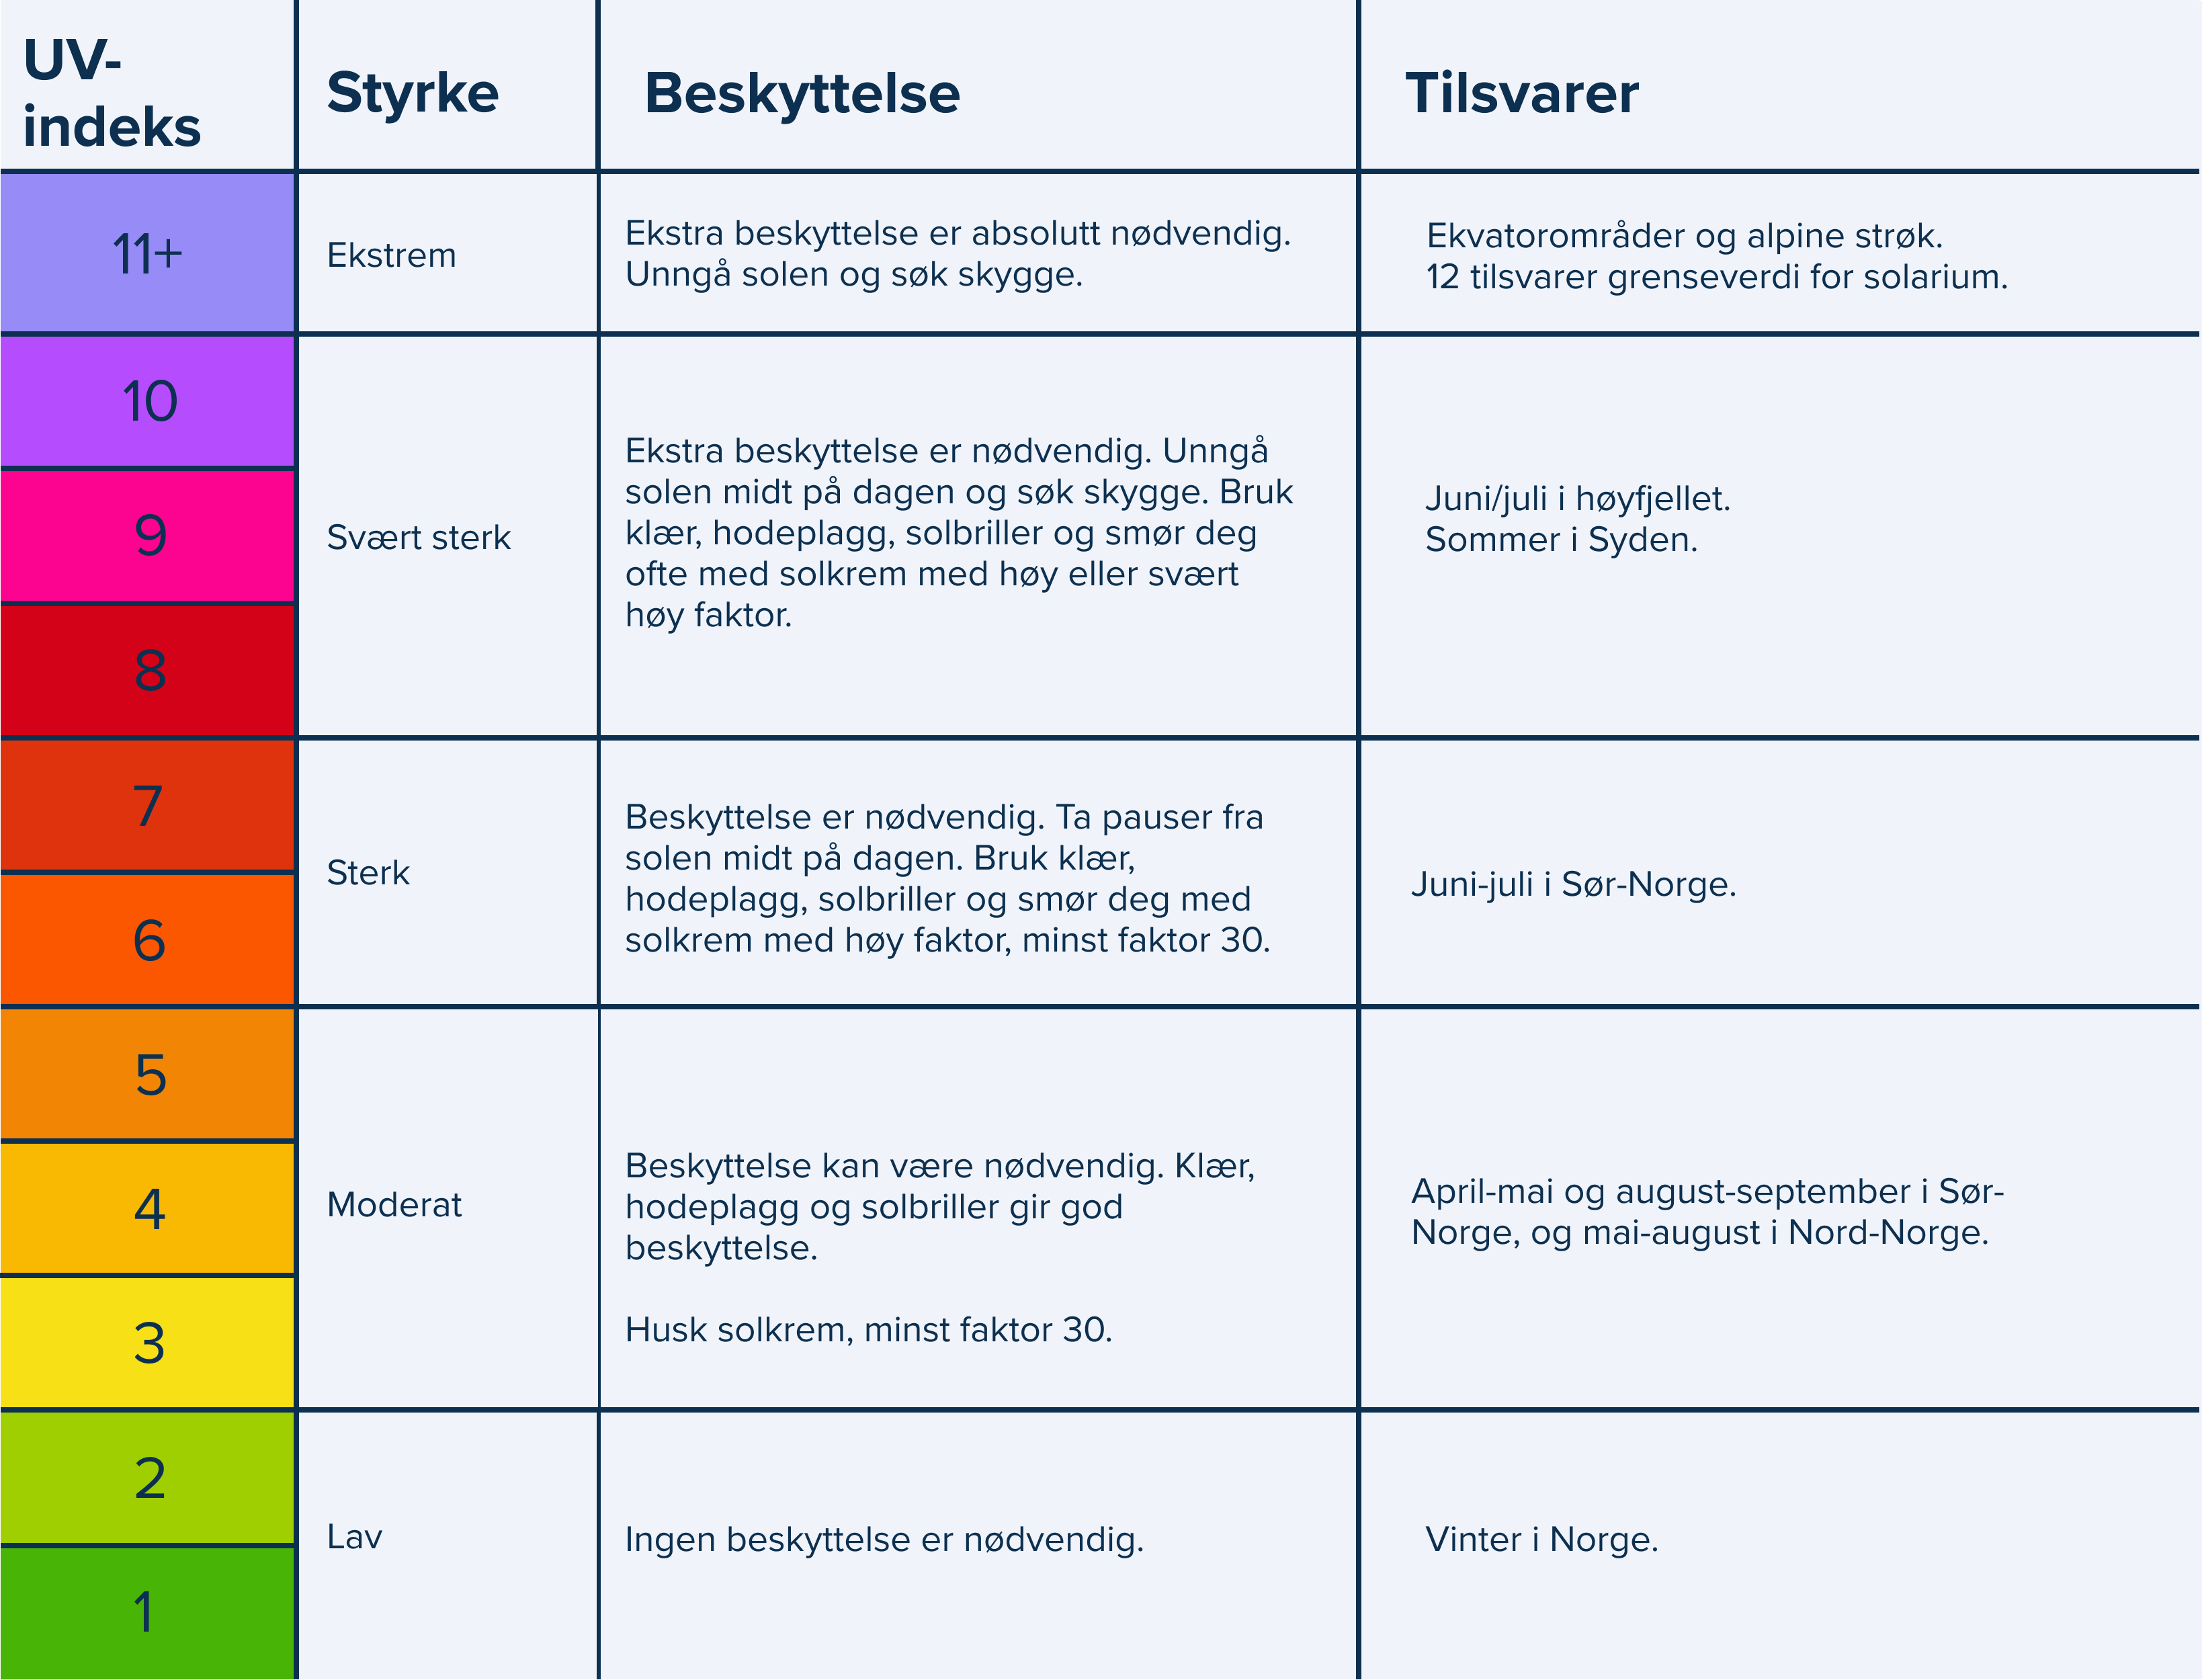 UV-indeks (forklaring i tabell)